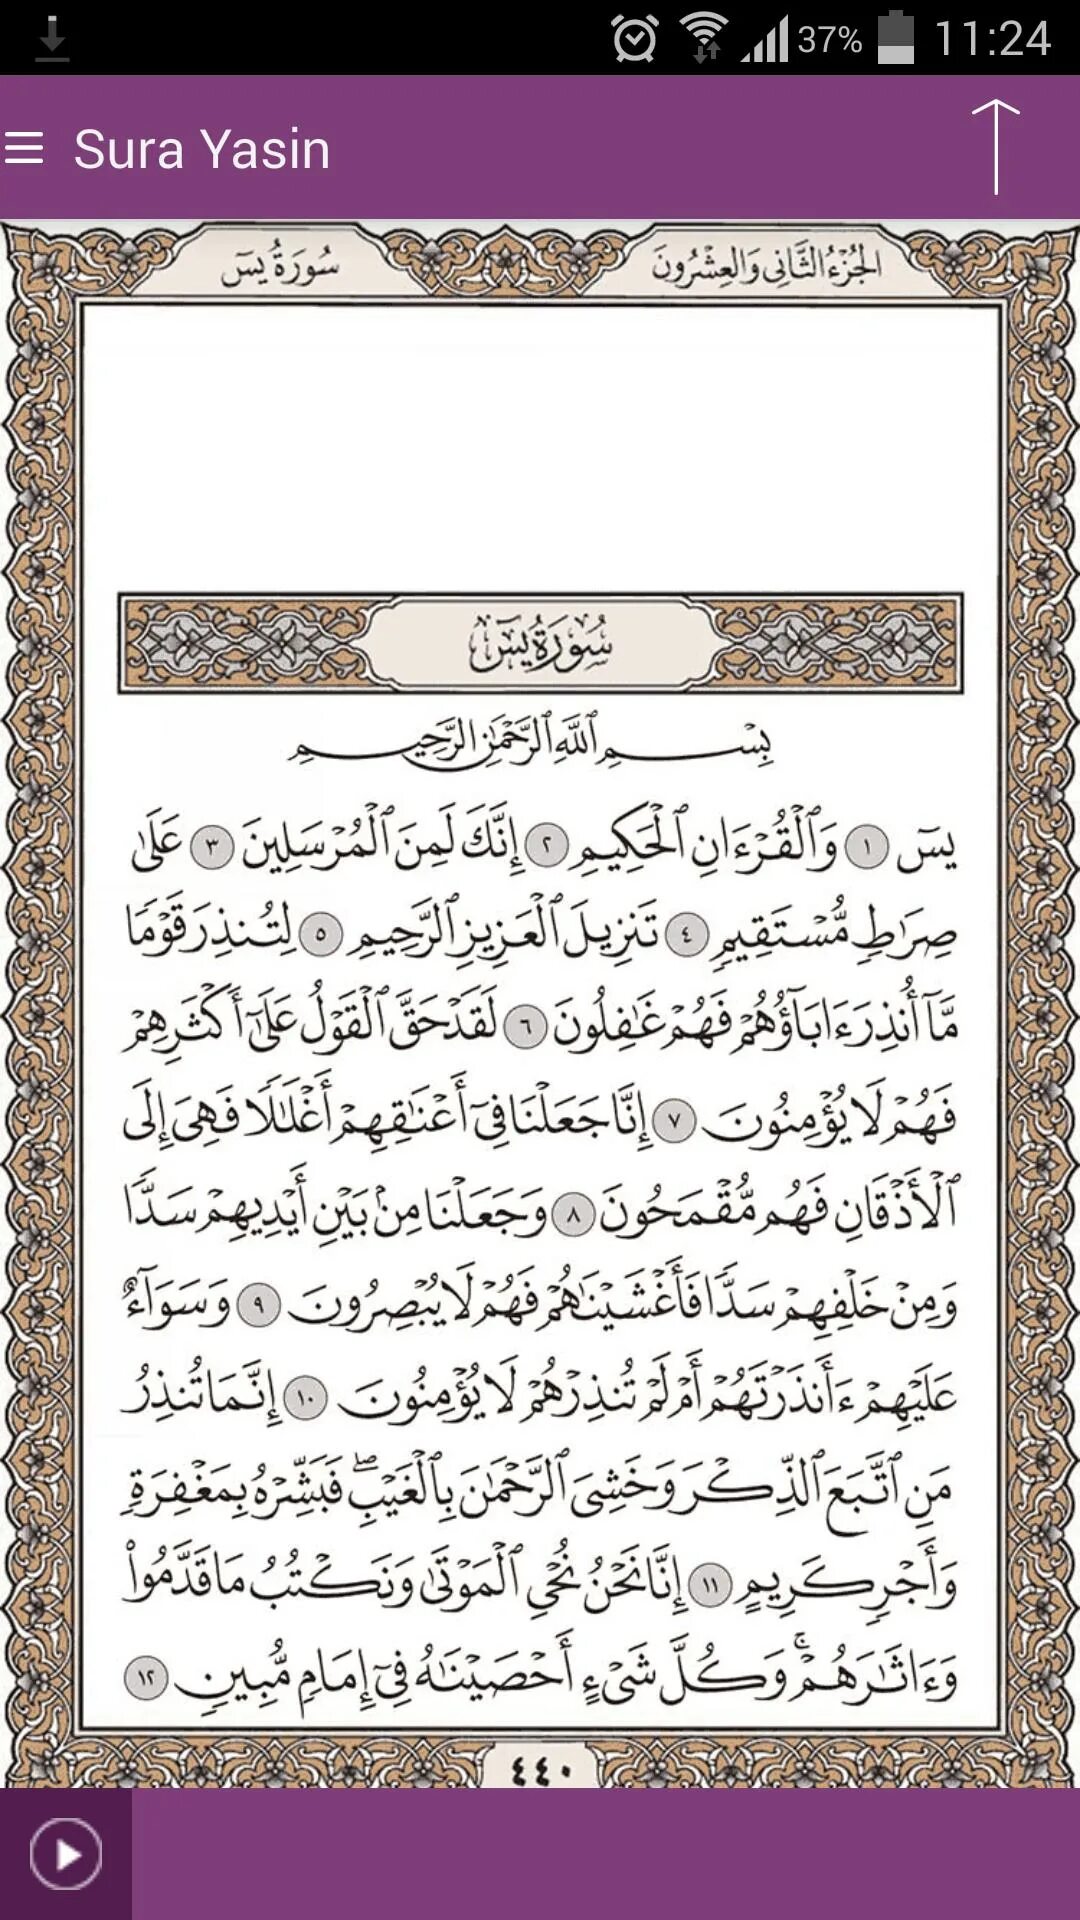 Сура ясин медленно. Коран Сура ясин. Сура ясин 1 Мубин. Ясин Коран 2 страниц. Сура ясин 1 и 2 Мубин.